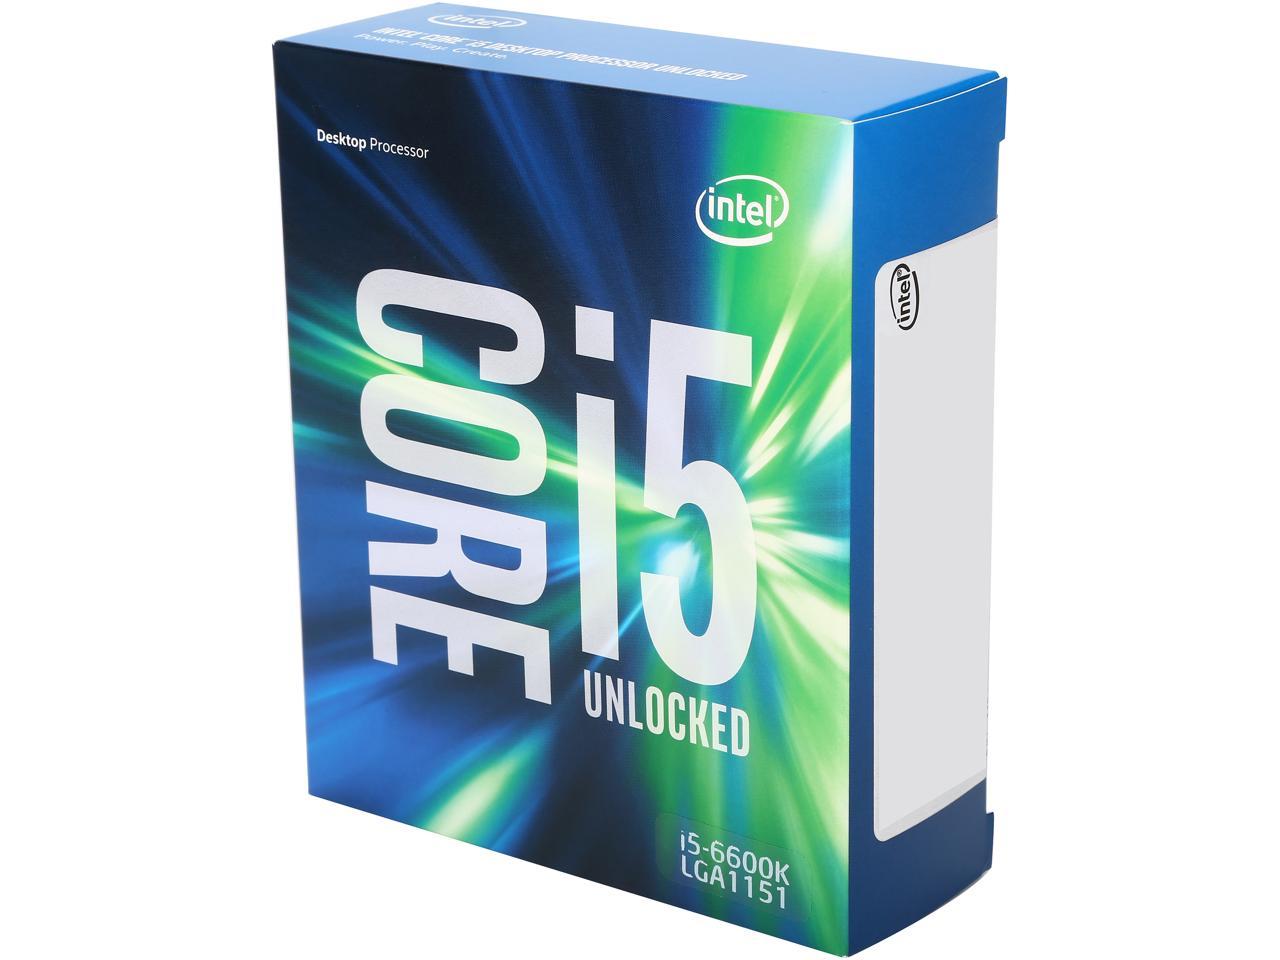 Intel Core i5-6600K 6M Skylake Quad-Core 3.5 GHz LGA 1151 91W BX80662I56600K Desktop Processor Intel HD Graphics 530